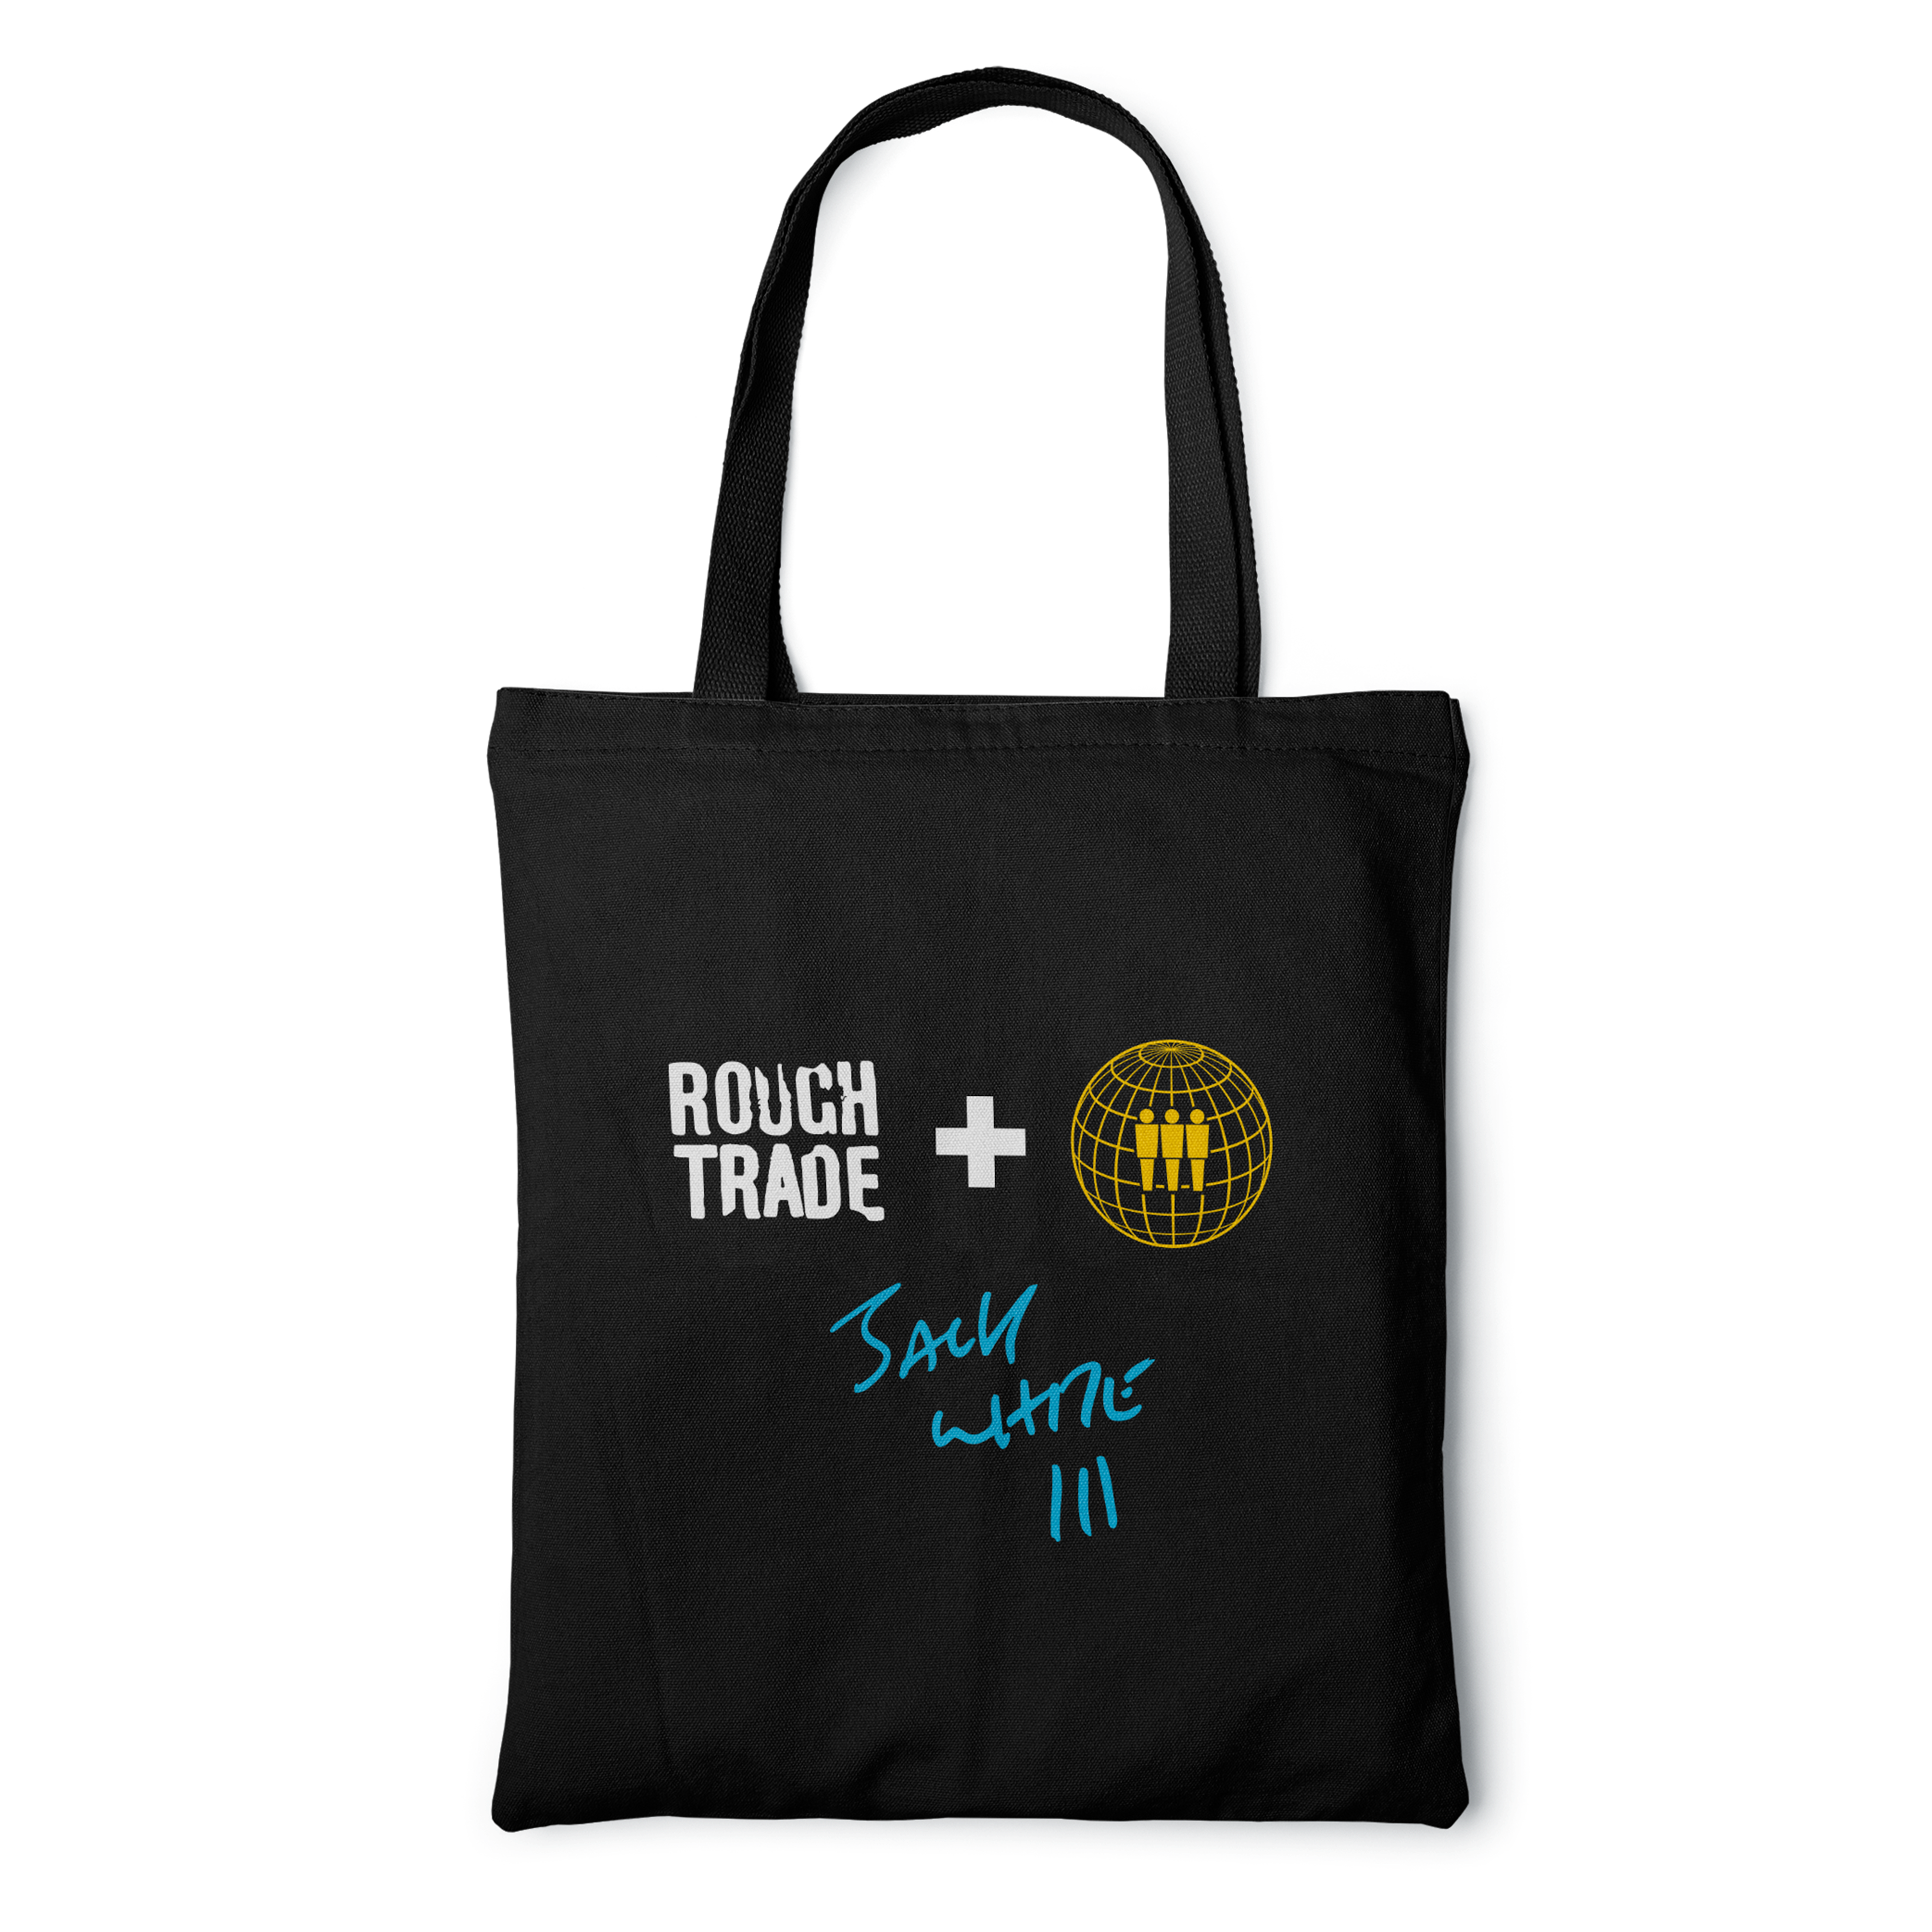 Album artwork for Rough Trade x Third Man x Jack White LTD Tote Bag by Rough Trade, Jack White, Third Man Records, Rough Trade Shops